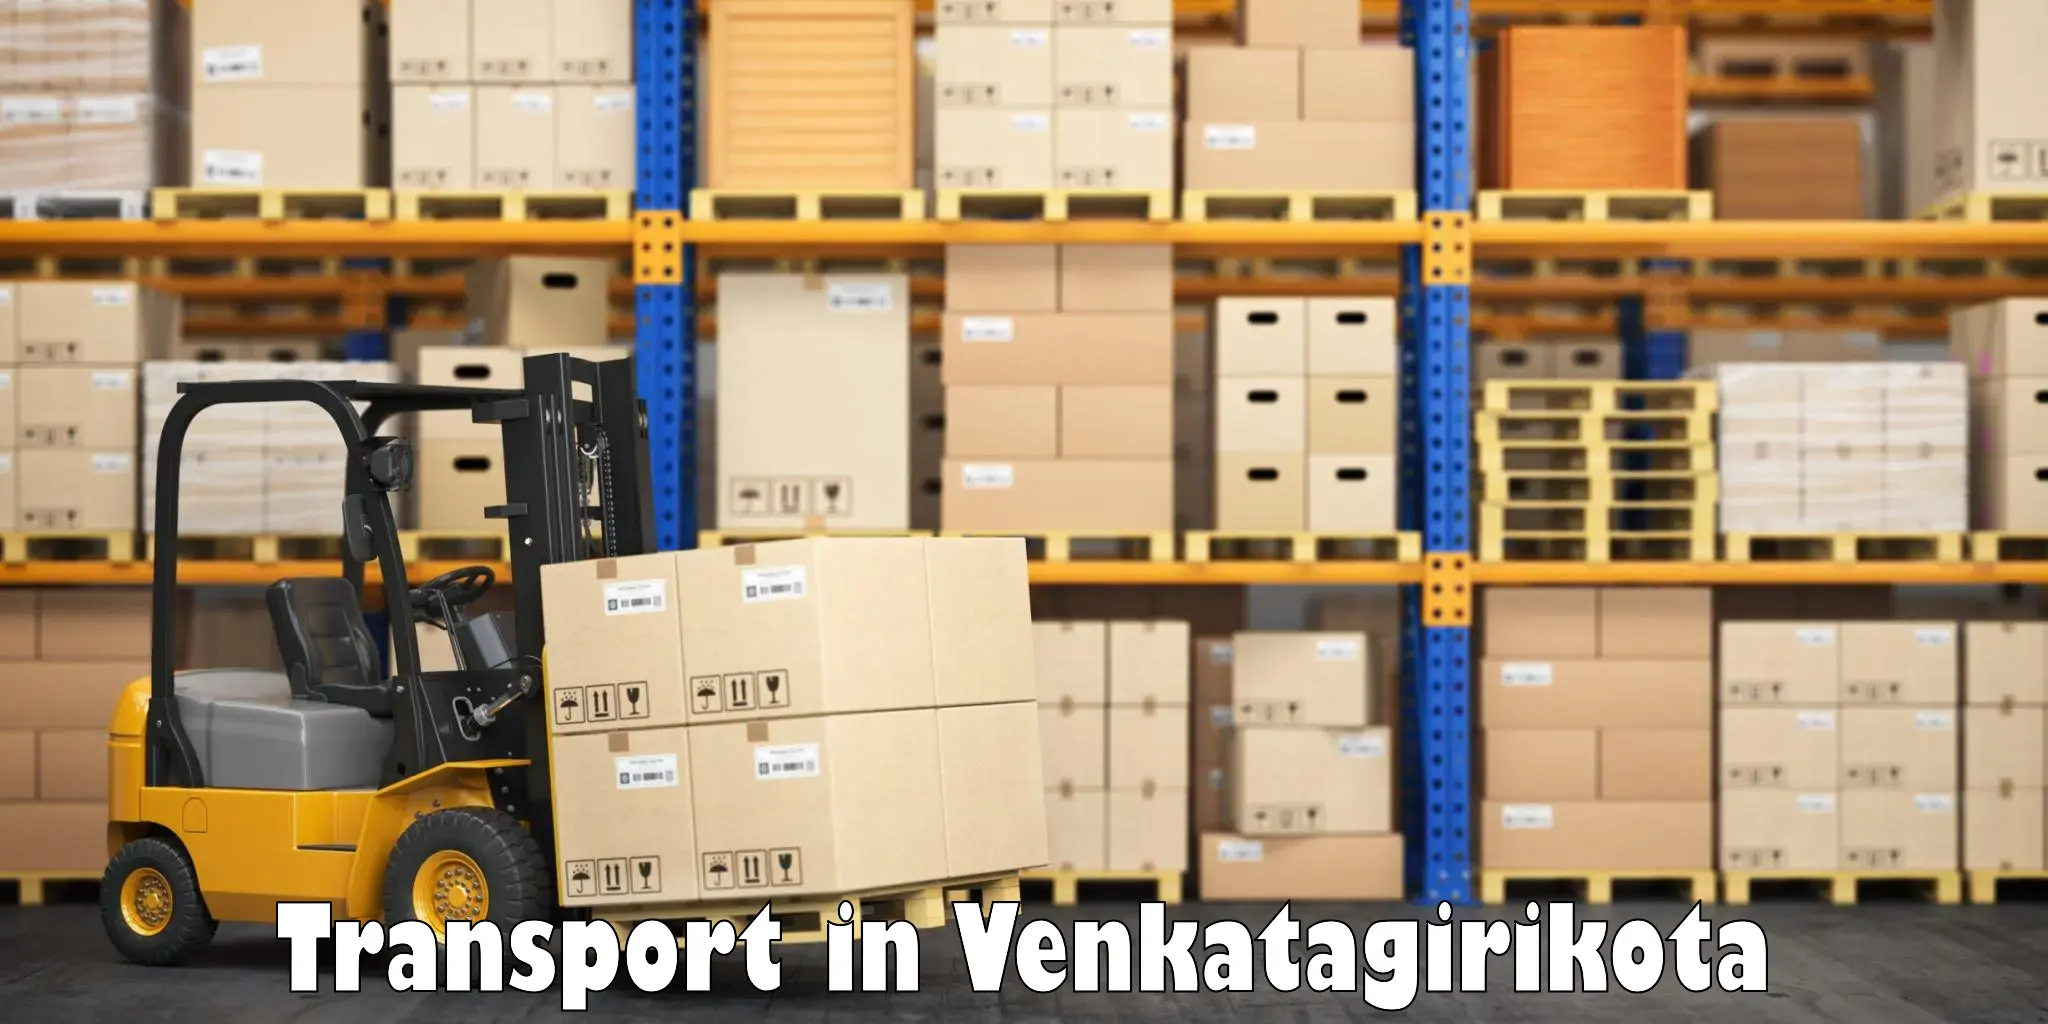 Logistics transportation services in Venkatagirikota